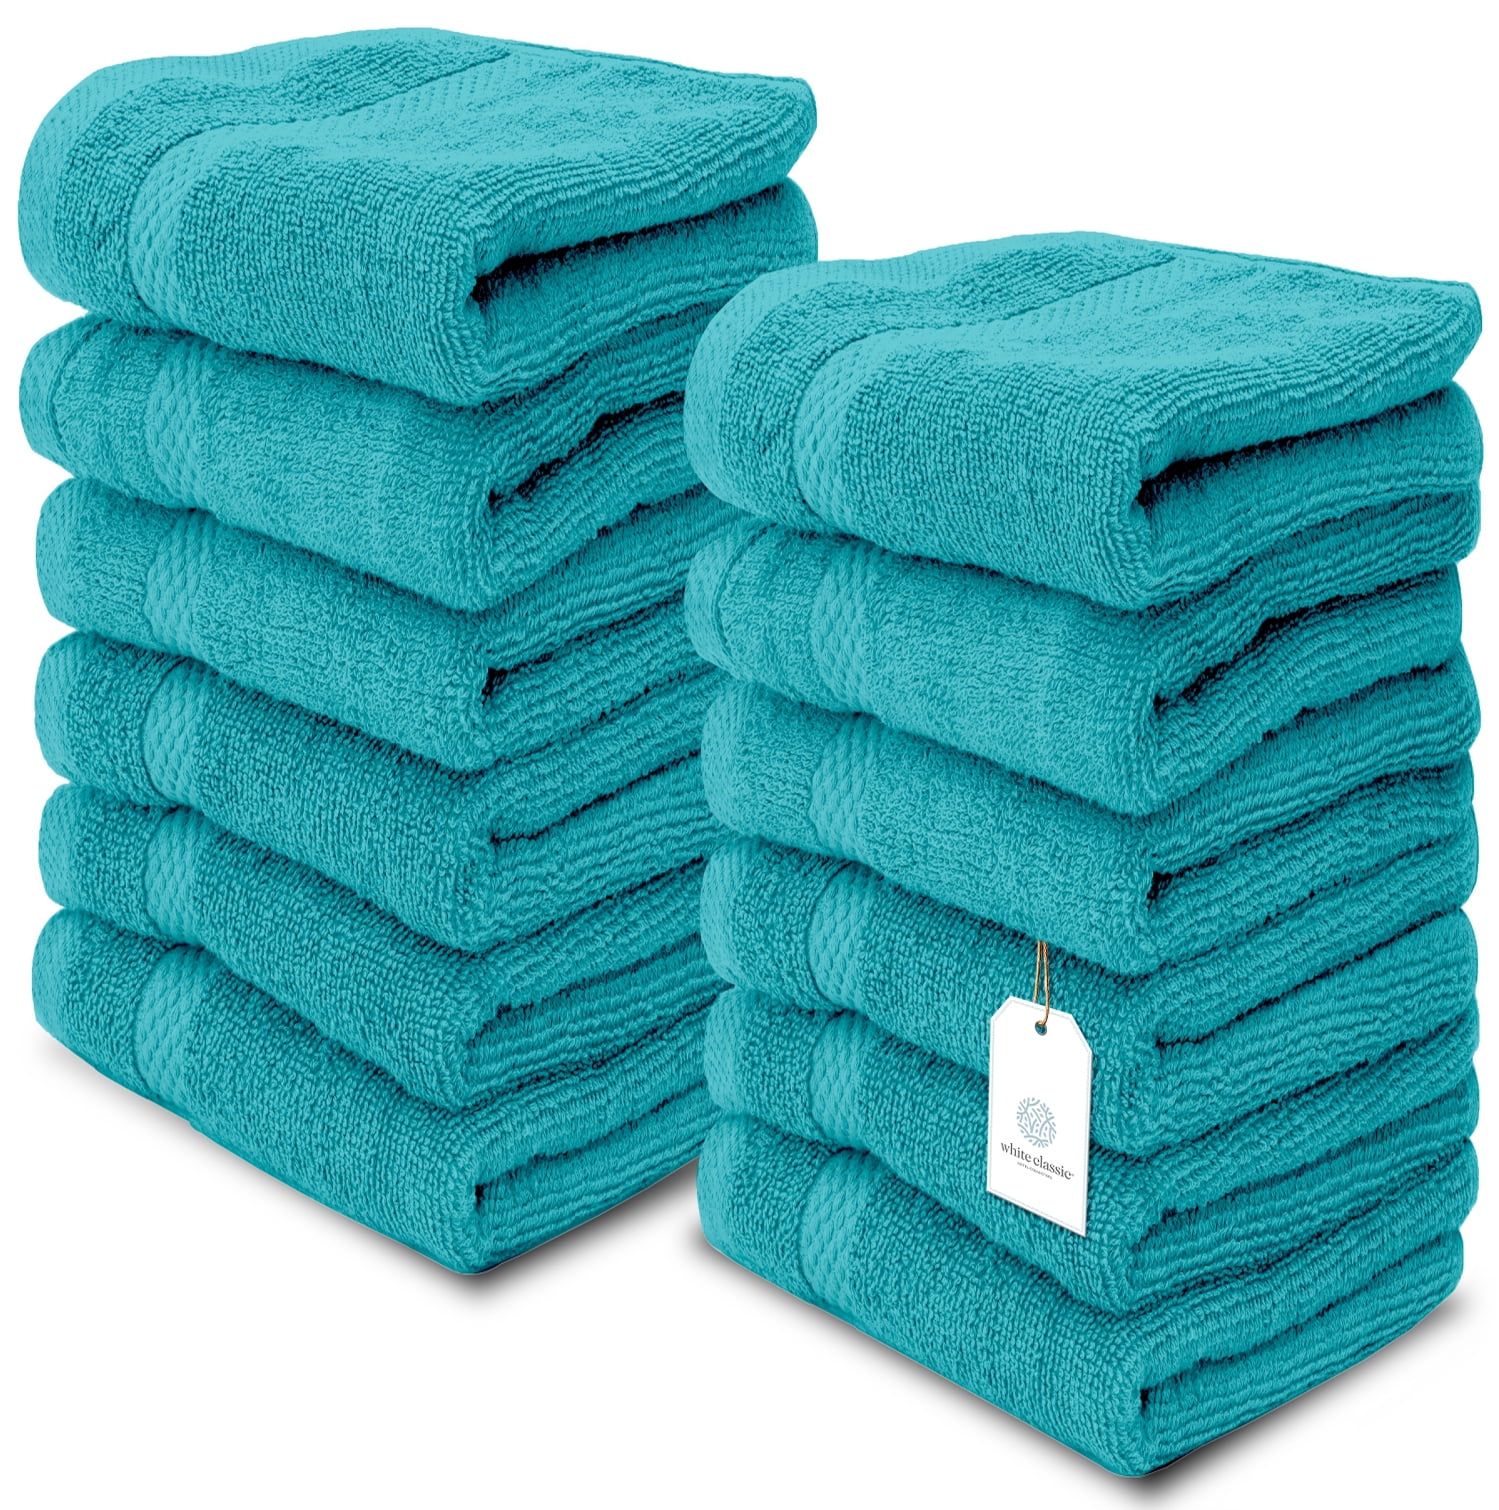 3 new white cotton hotel bath towels large 27x54 hotel premium plush 17# dozen 